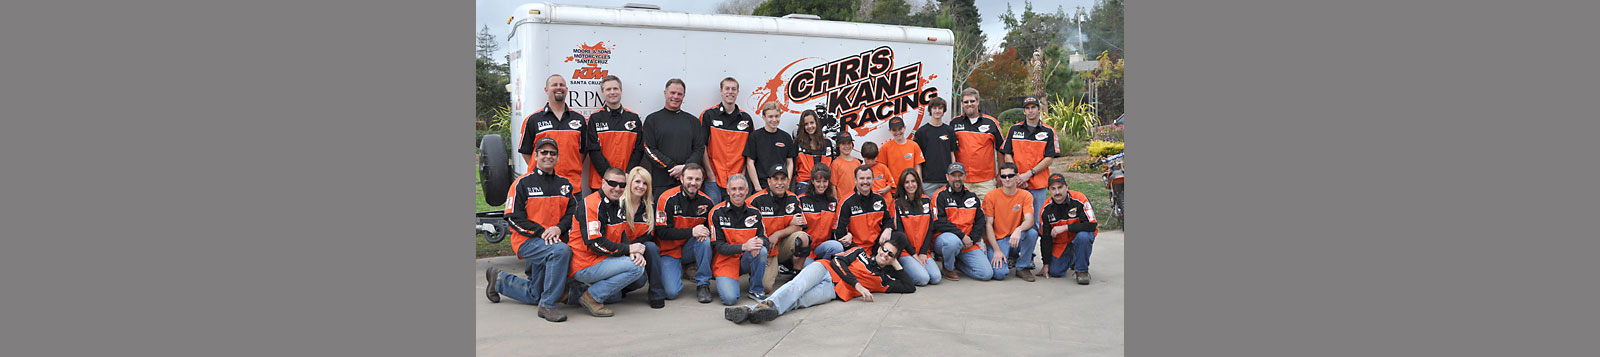 Chris Kane Racing team photo